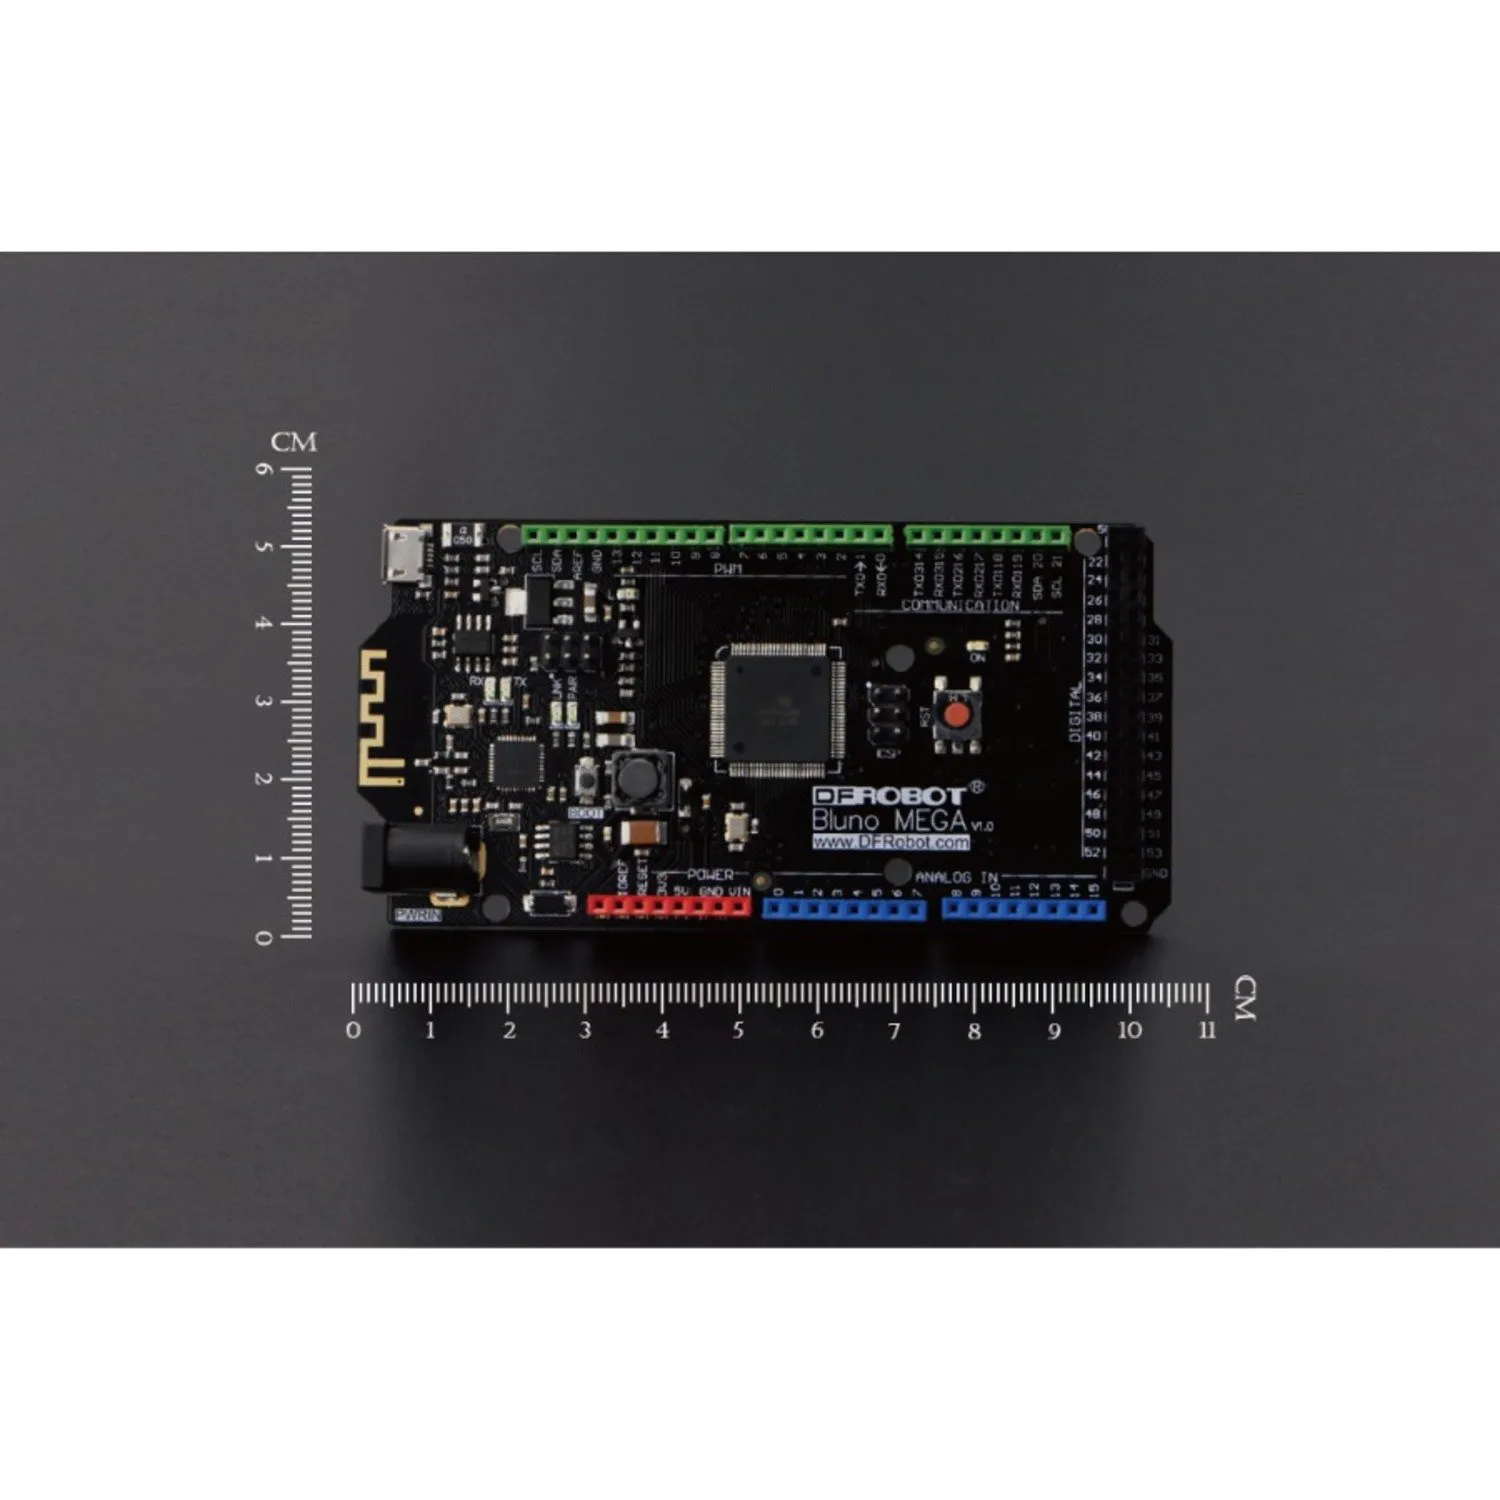 Photo of Bluno Mega 1280 - An Arduino Mega with Bluetooth 4.0